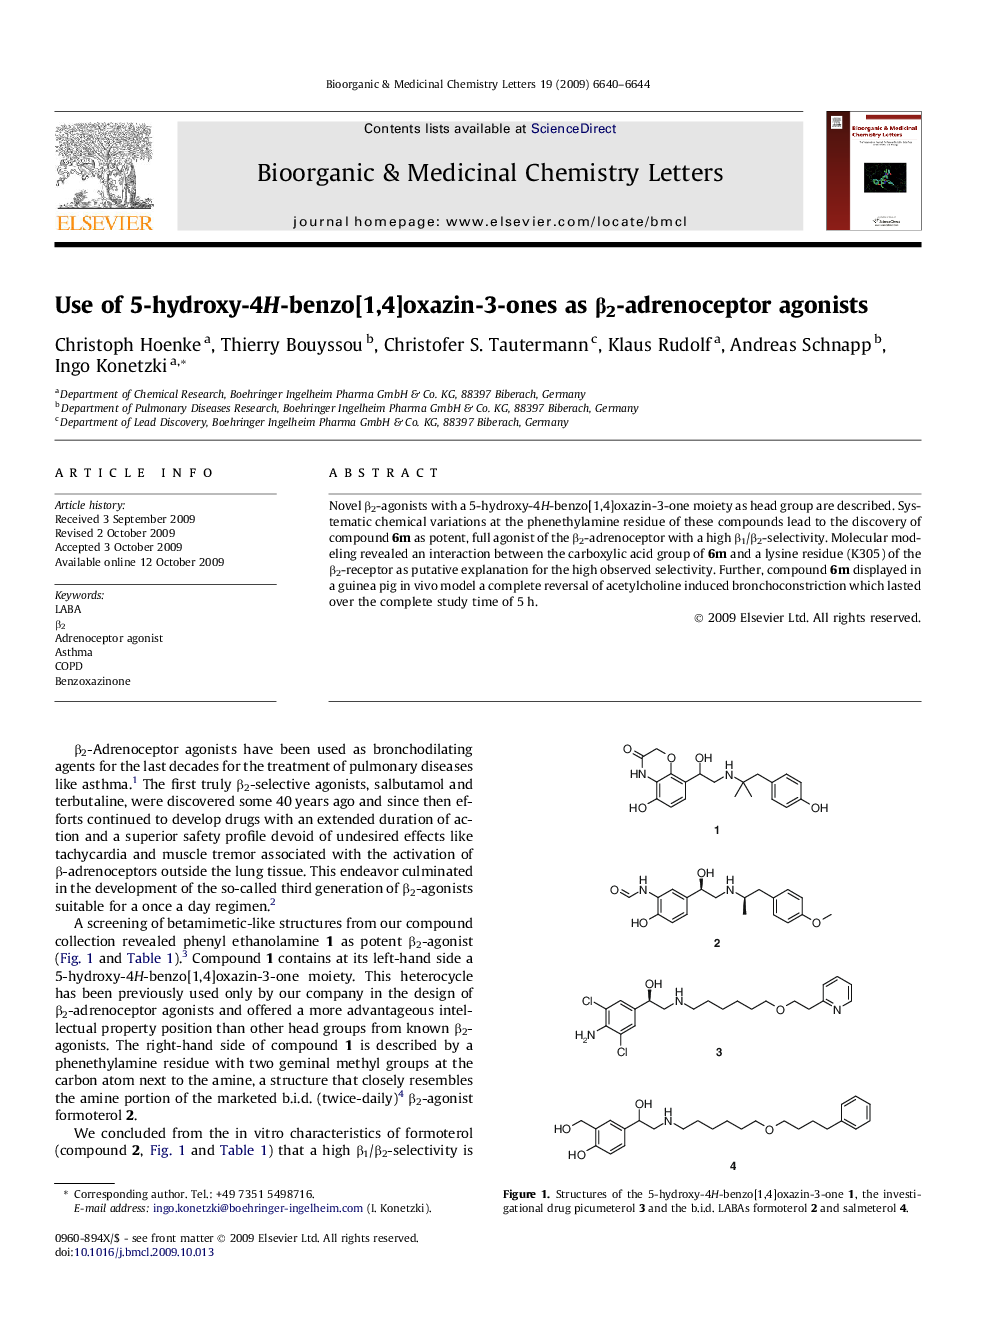 Use of 5-hydroxy-4H-benzo[1,4]oxazin-3-ones as β2-adrenoceptor agonists